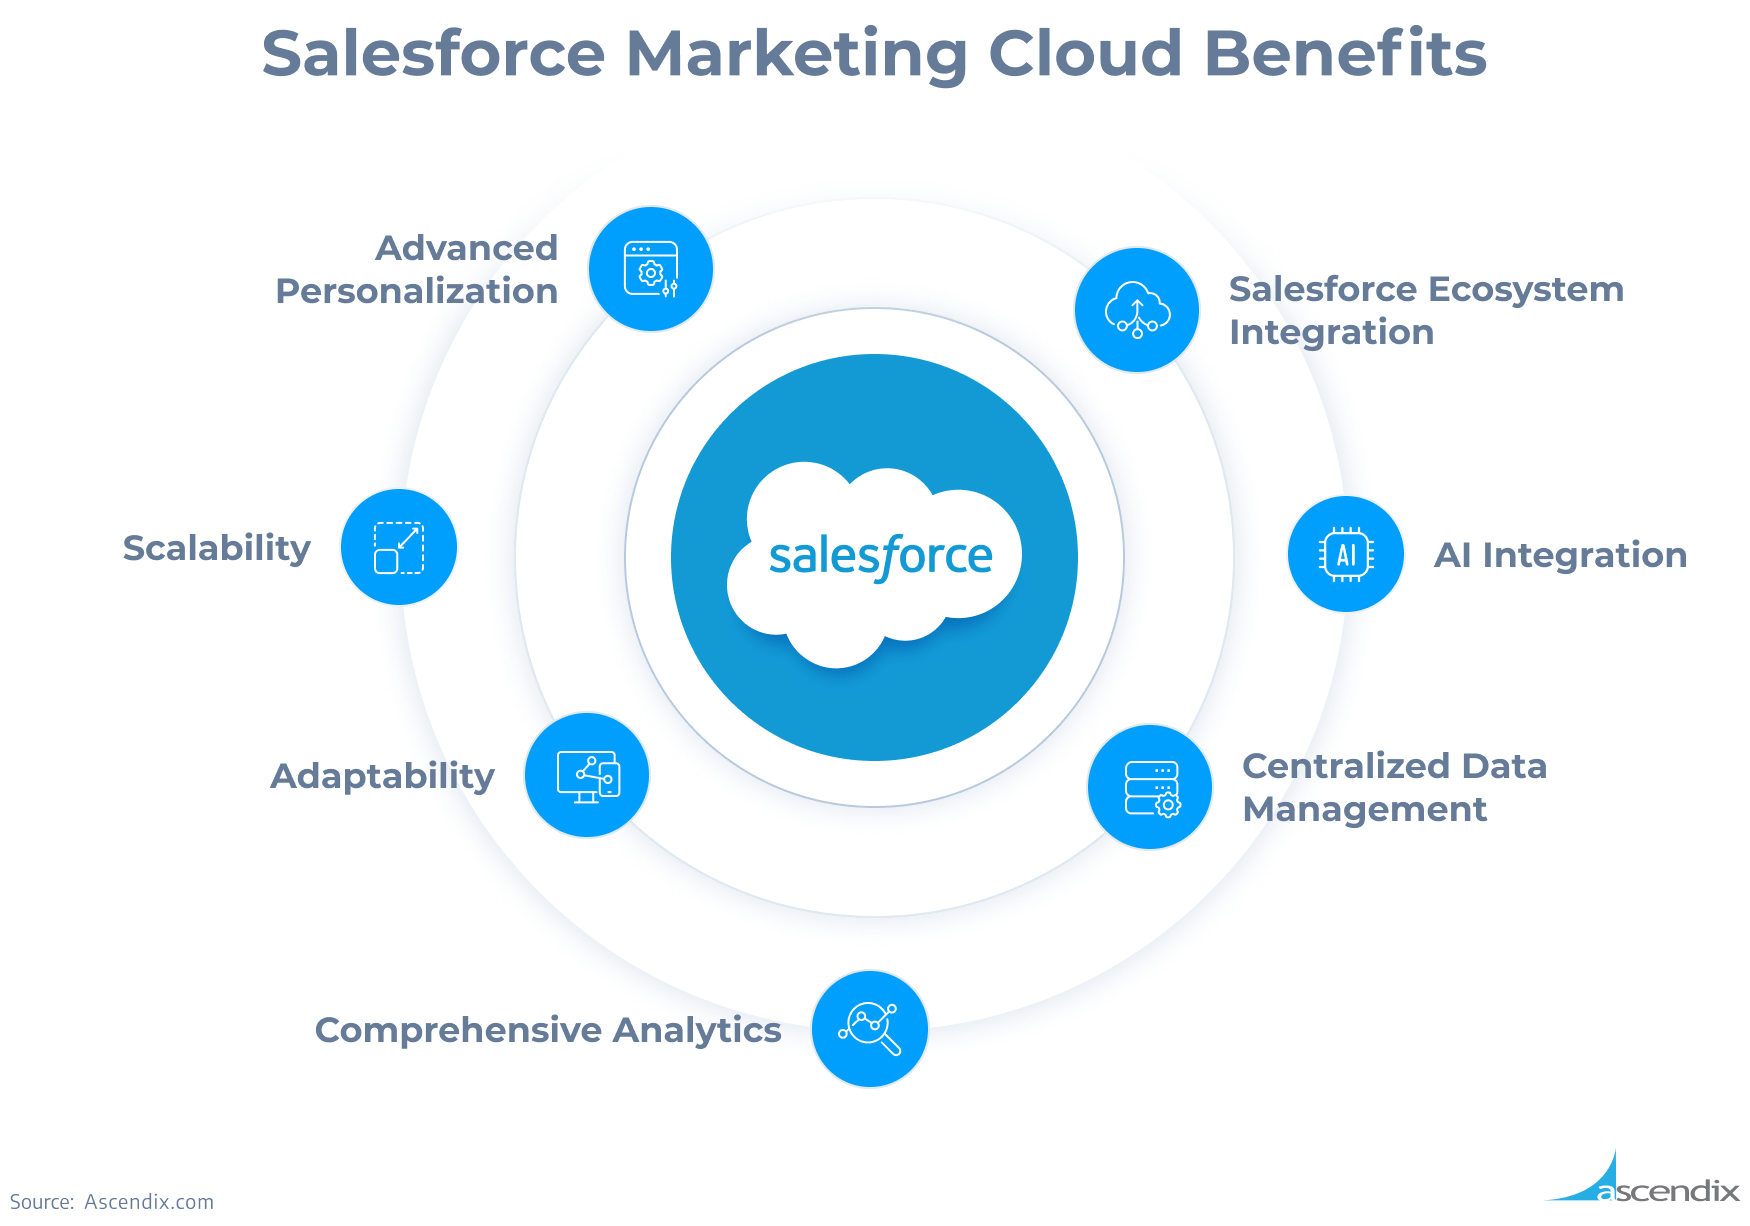 image showing Salesforce marketing cloud benefits